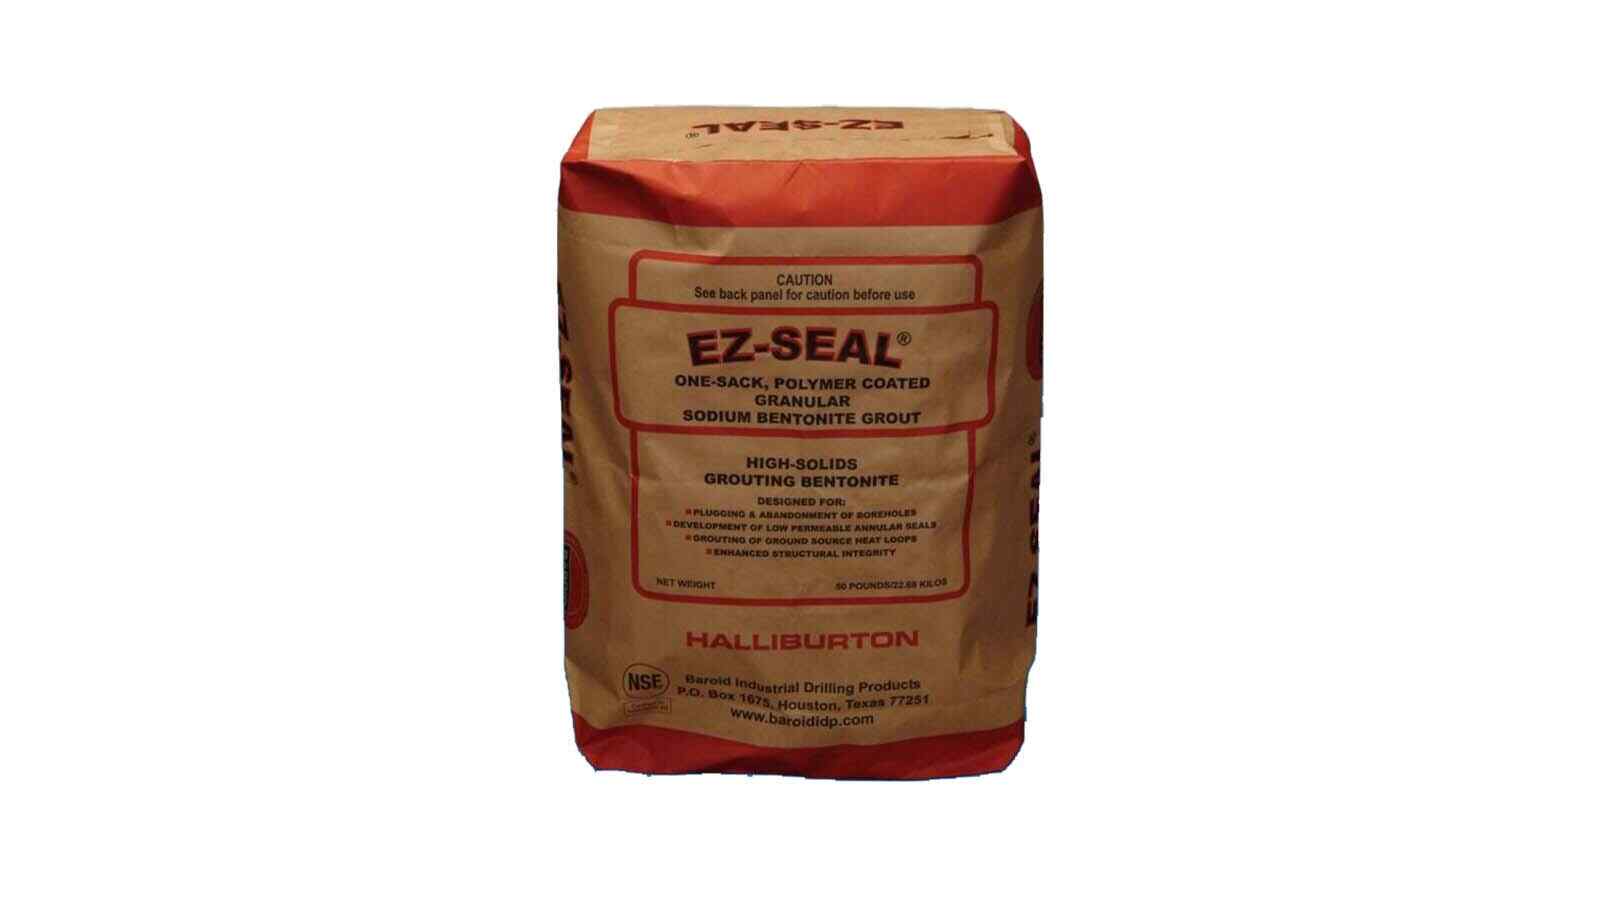 EZ-SEAL